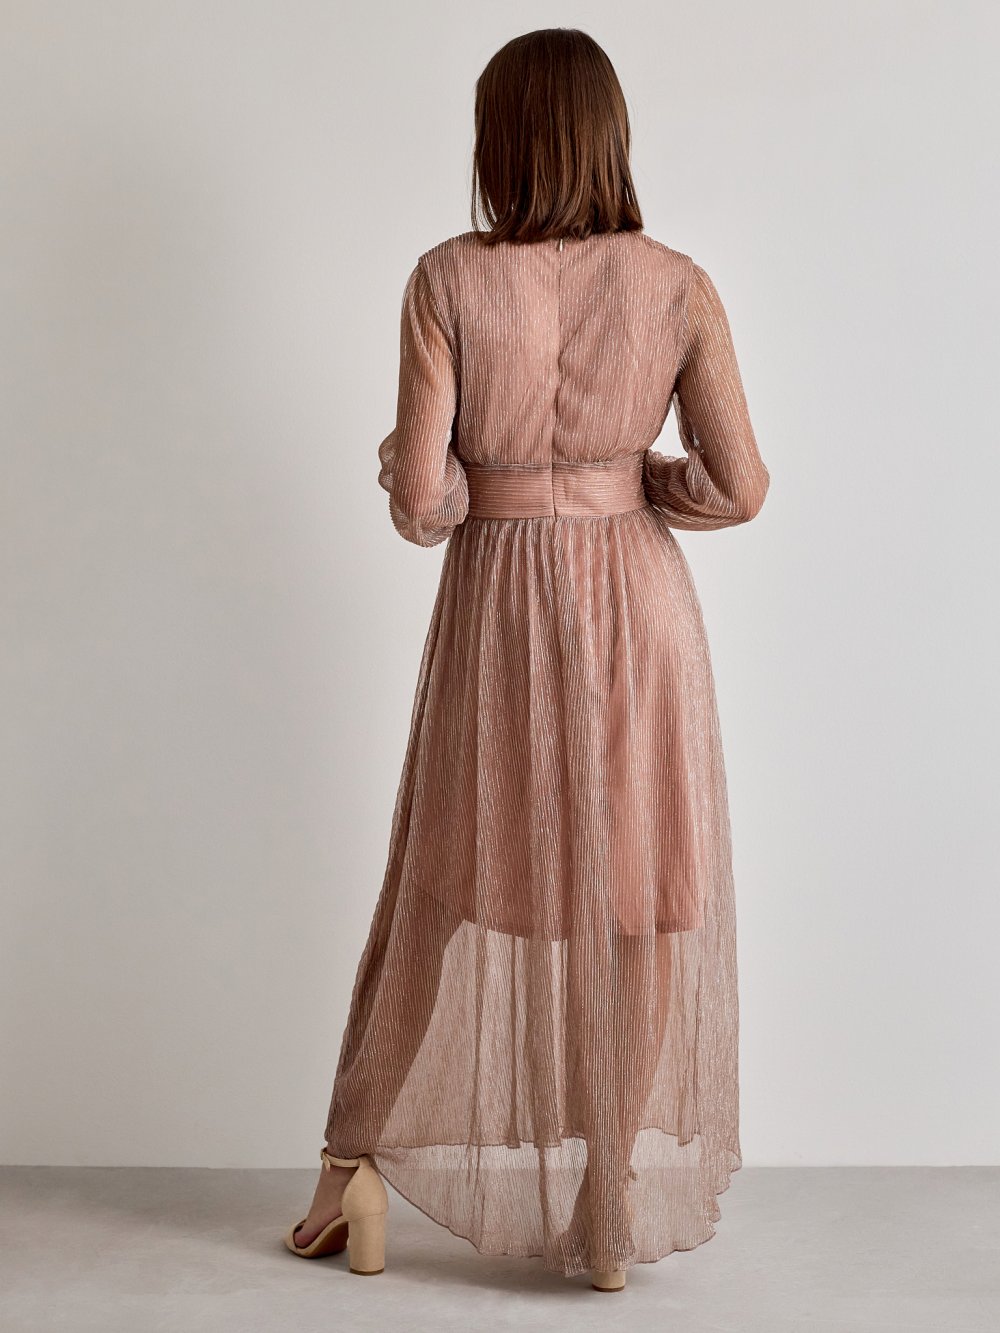 Staroružové šaty Claudette